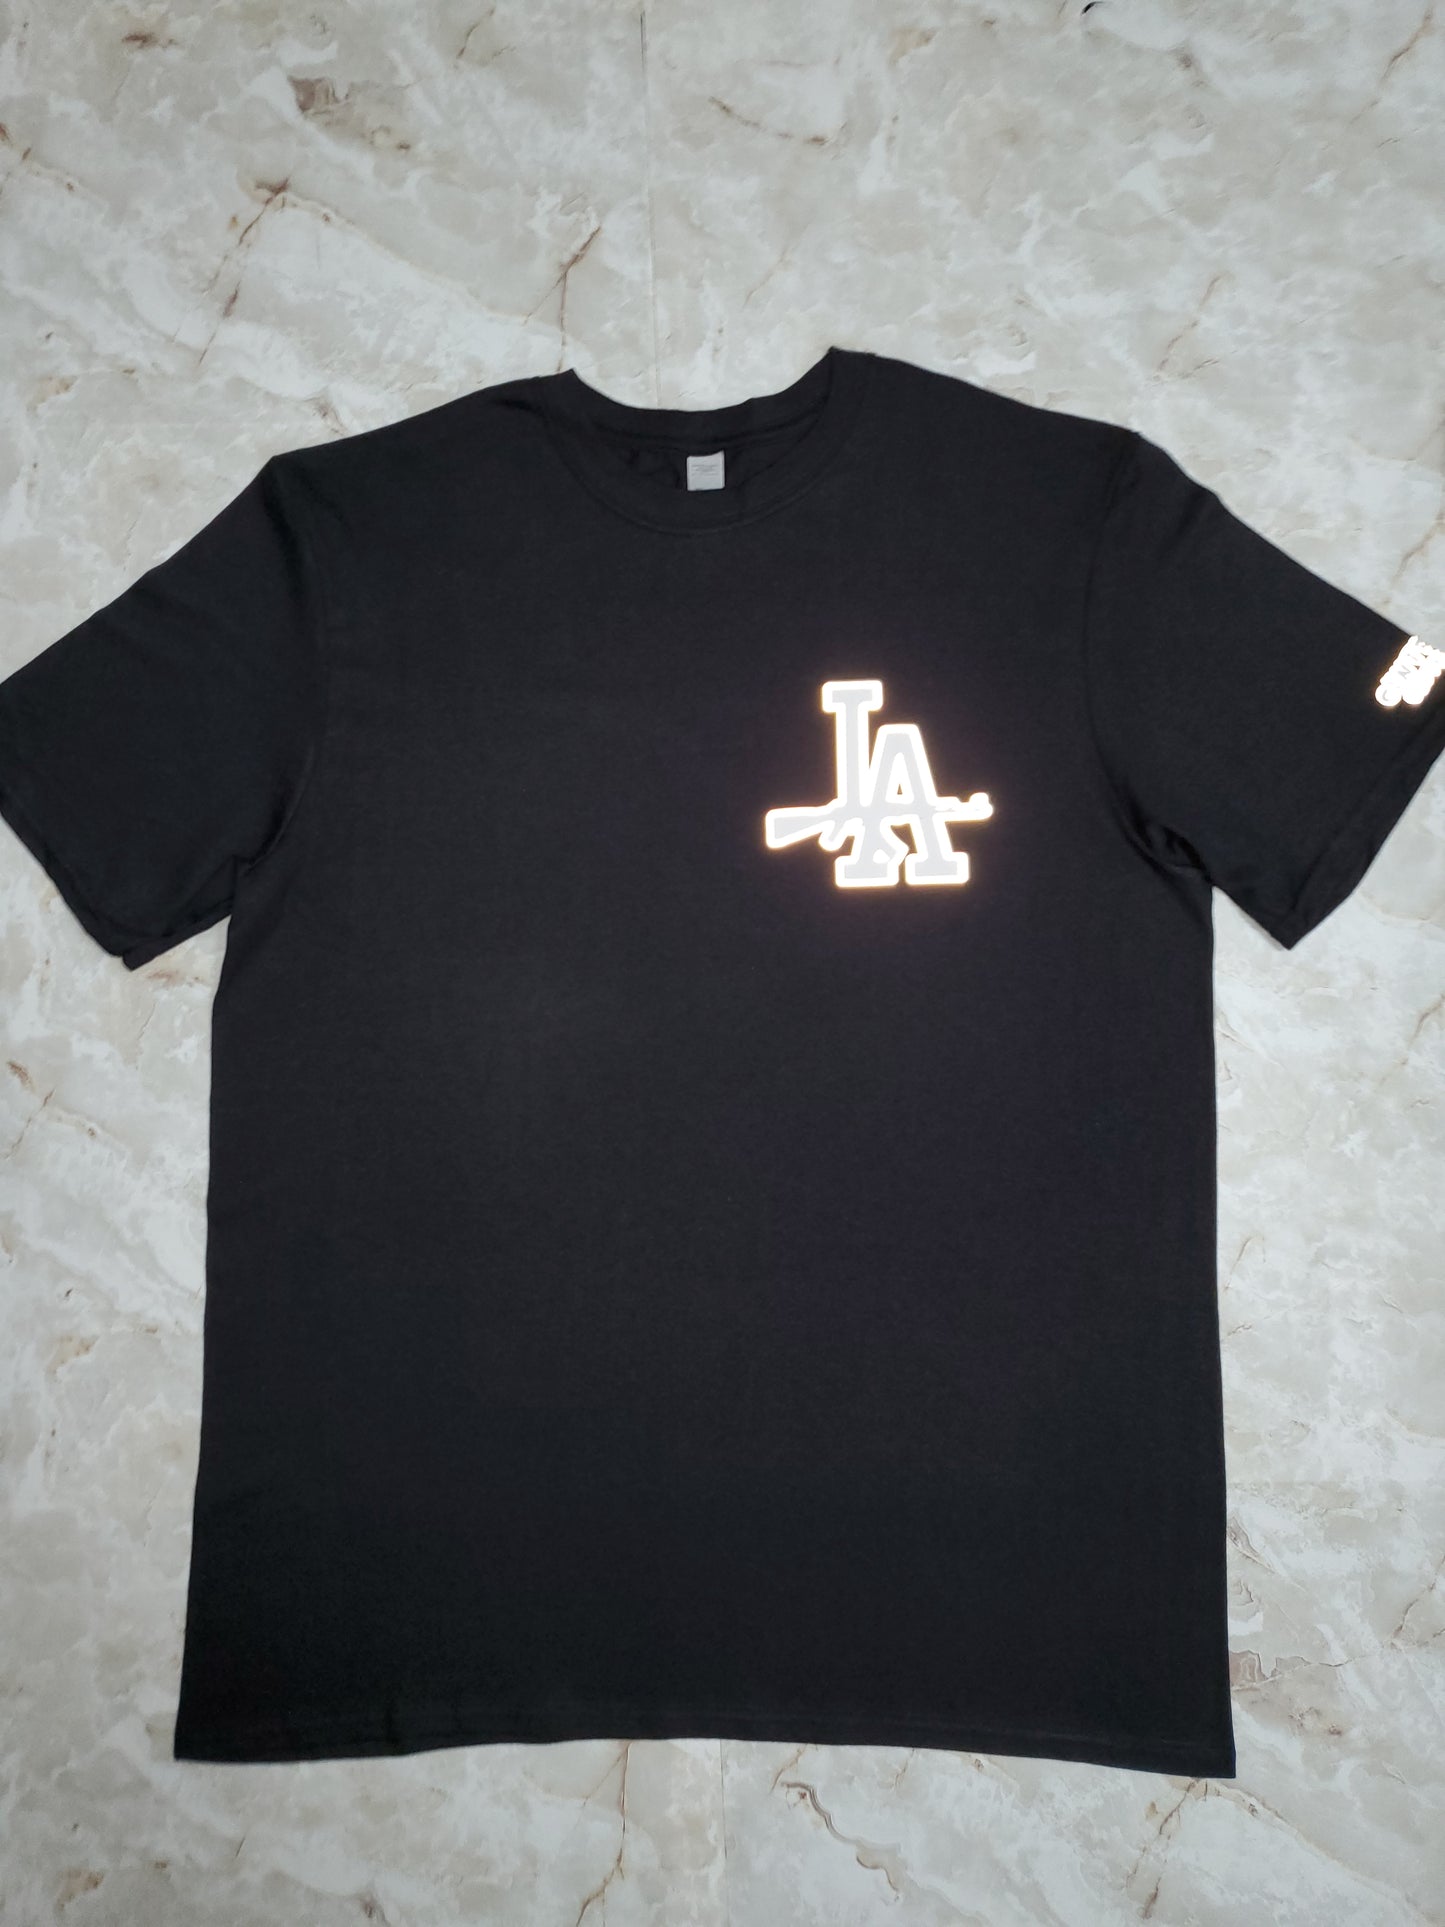 Stay Dangerous T-Shirt (Black) - Centre Ave Clothing Co.